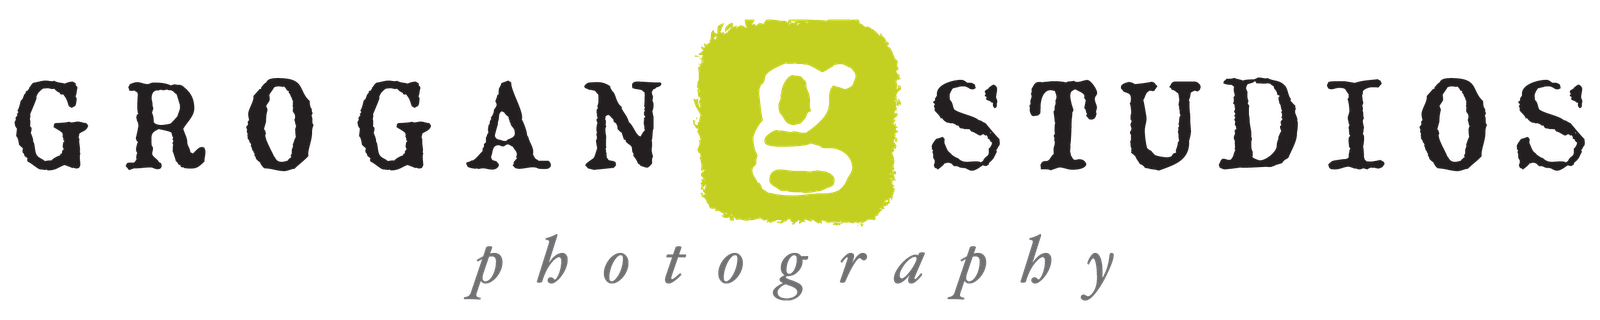 Grogan Studios Blog